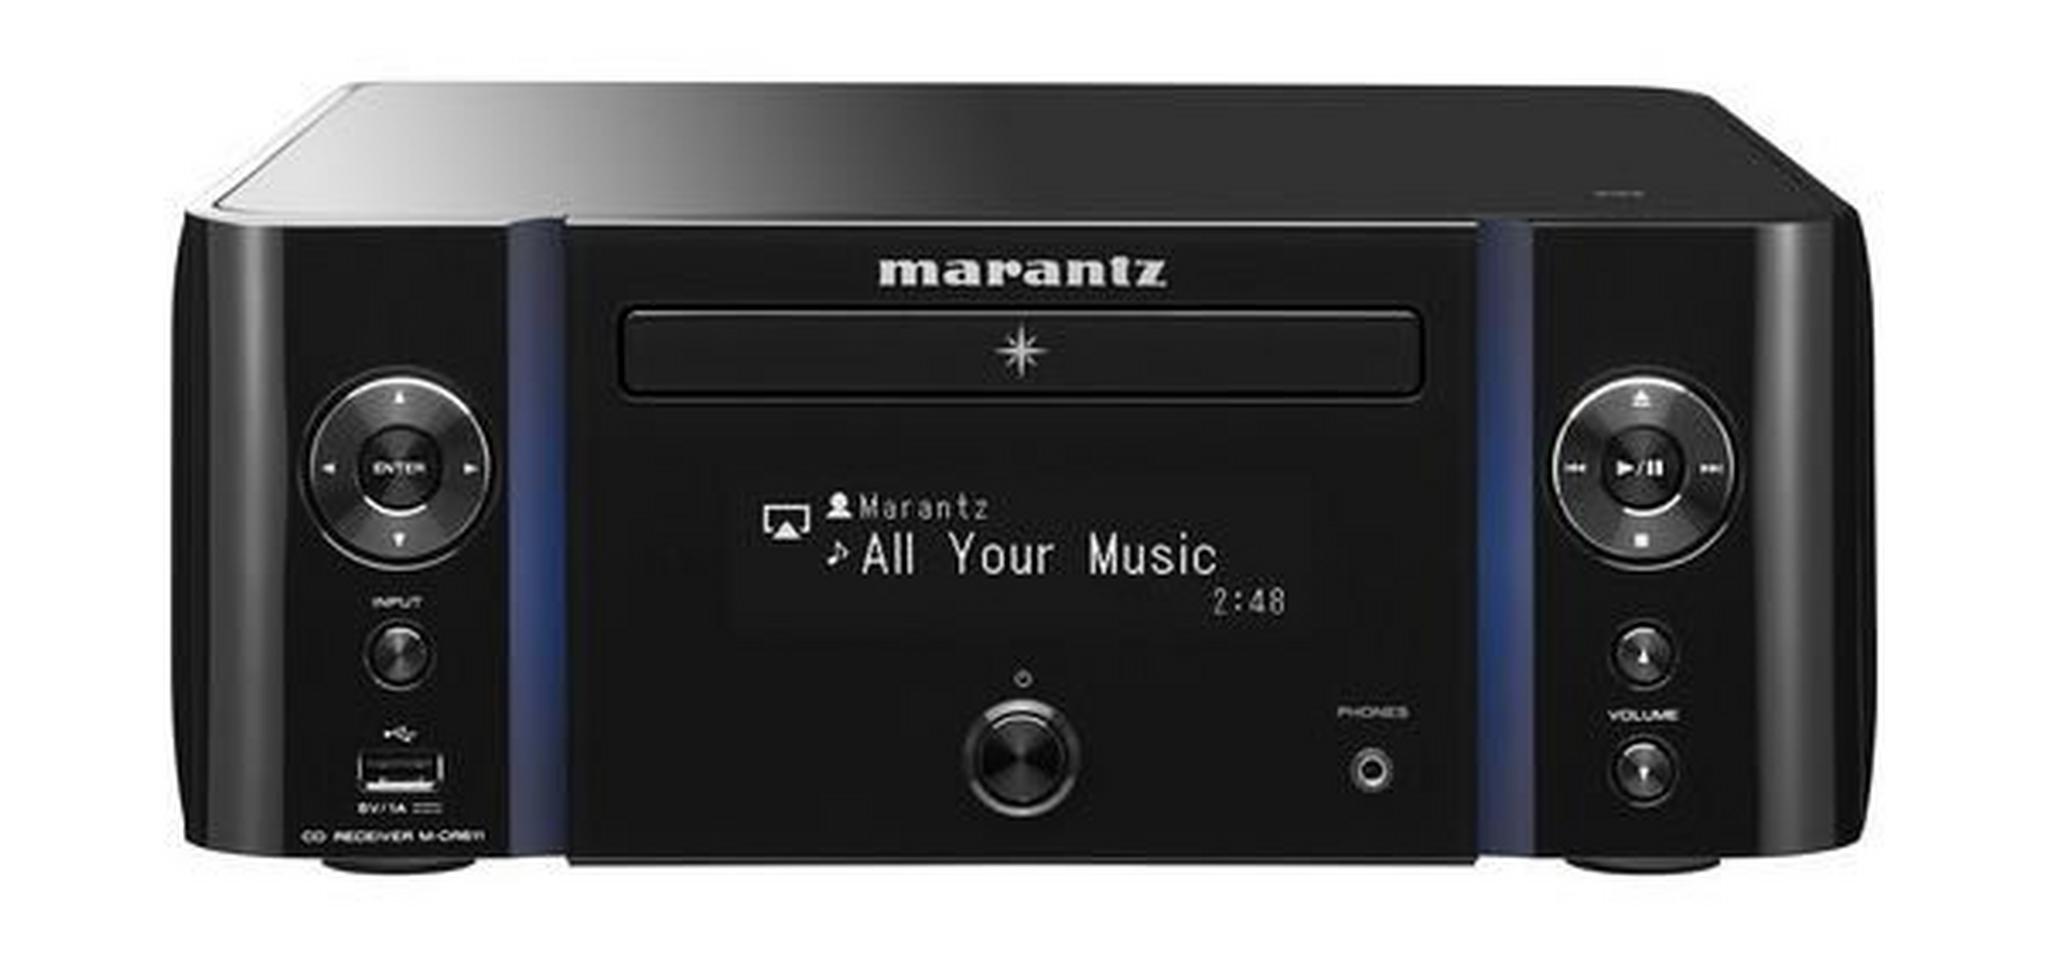 Marantz M-CR611 120W Network CD Receiver